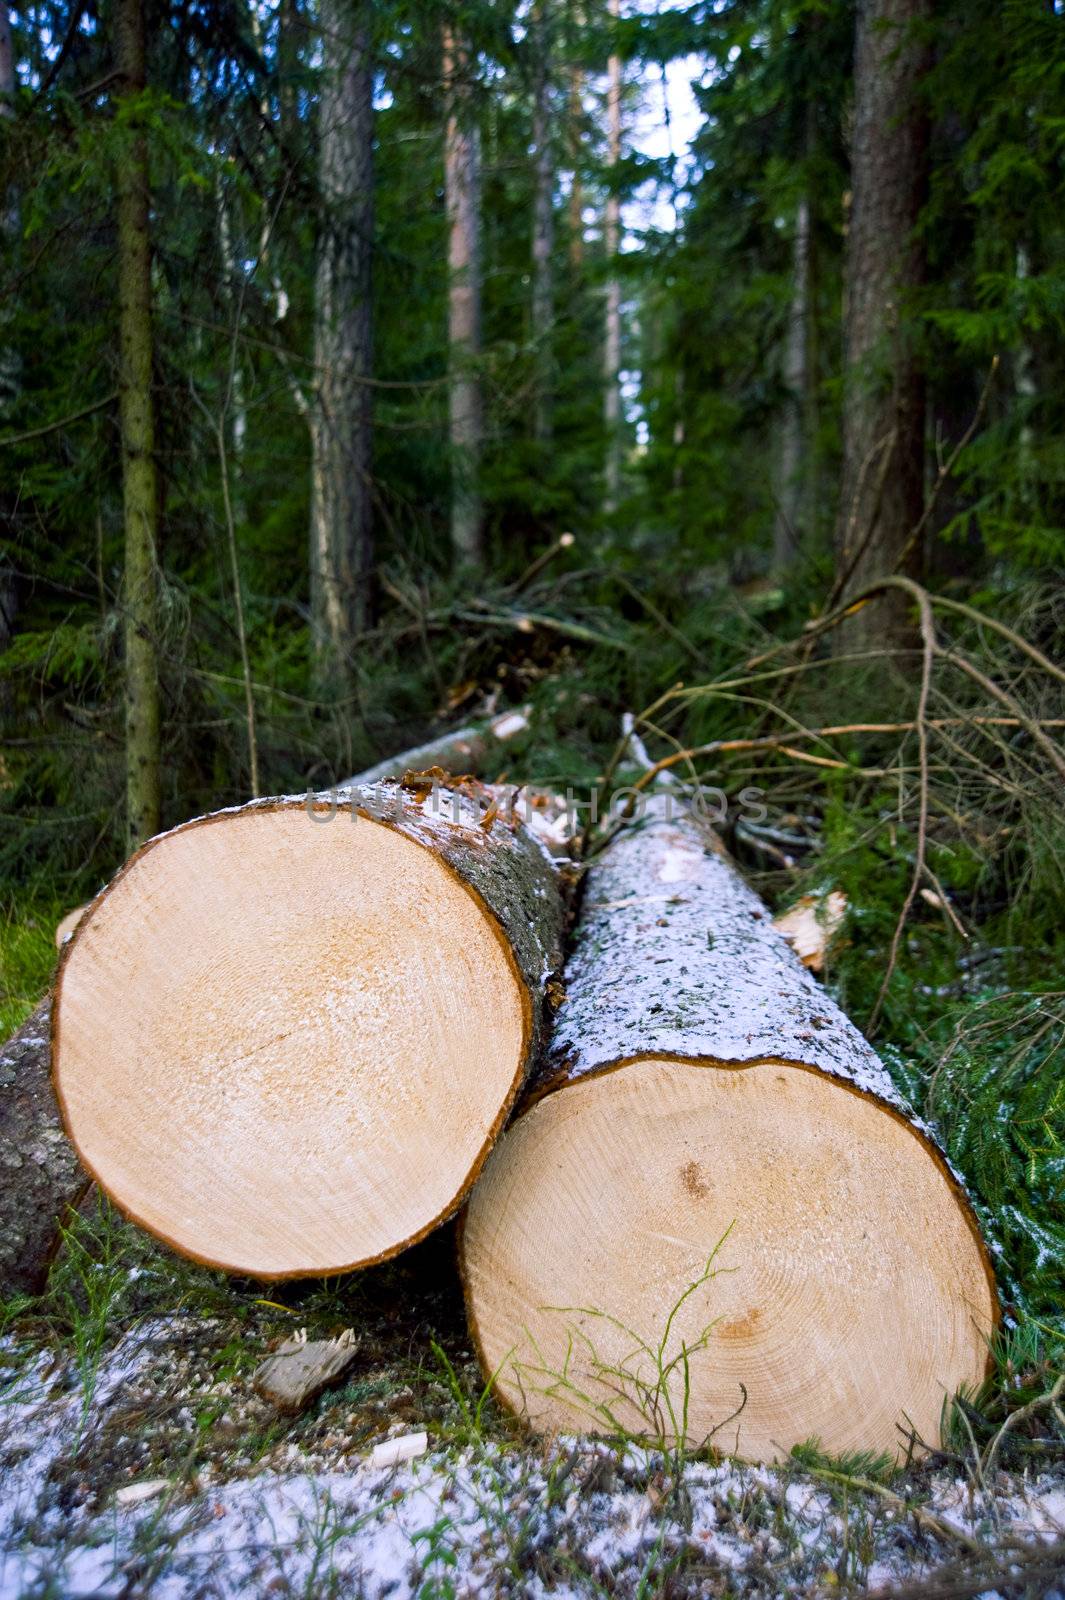 Chopped trees by Alenmax